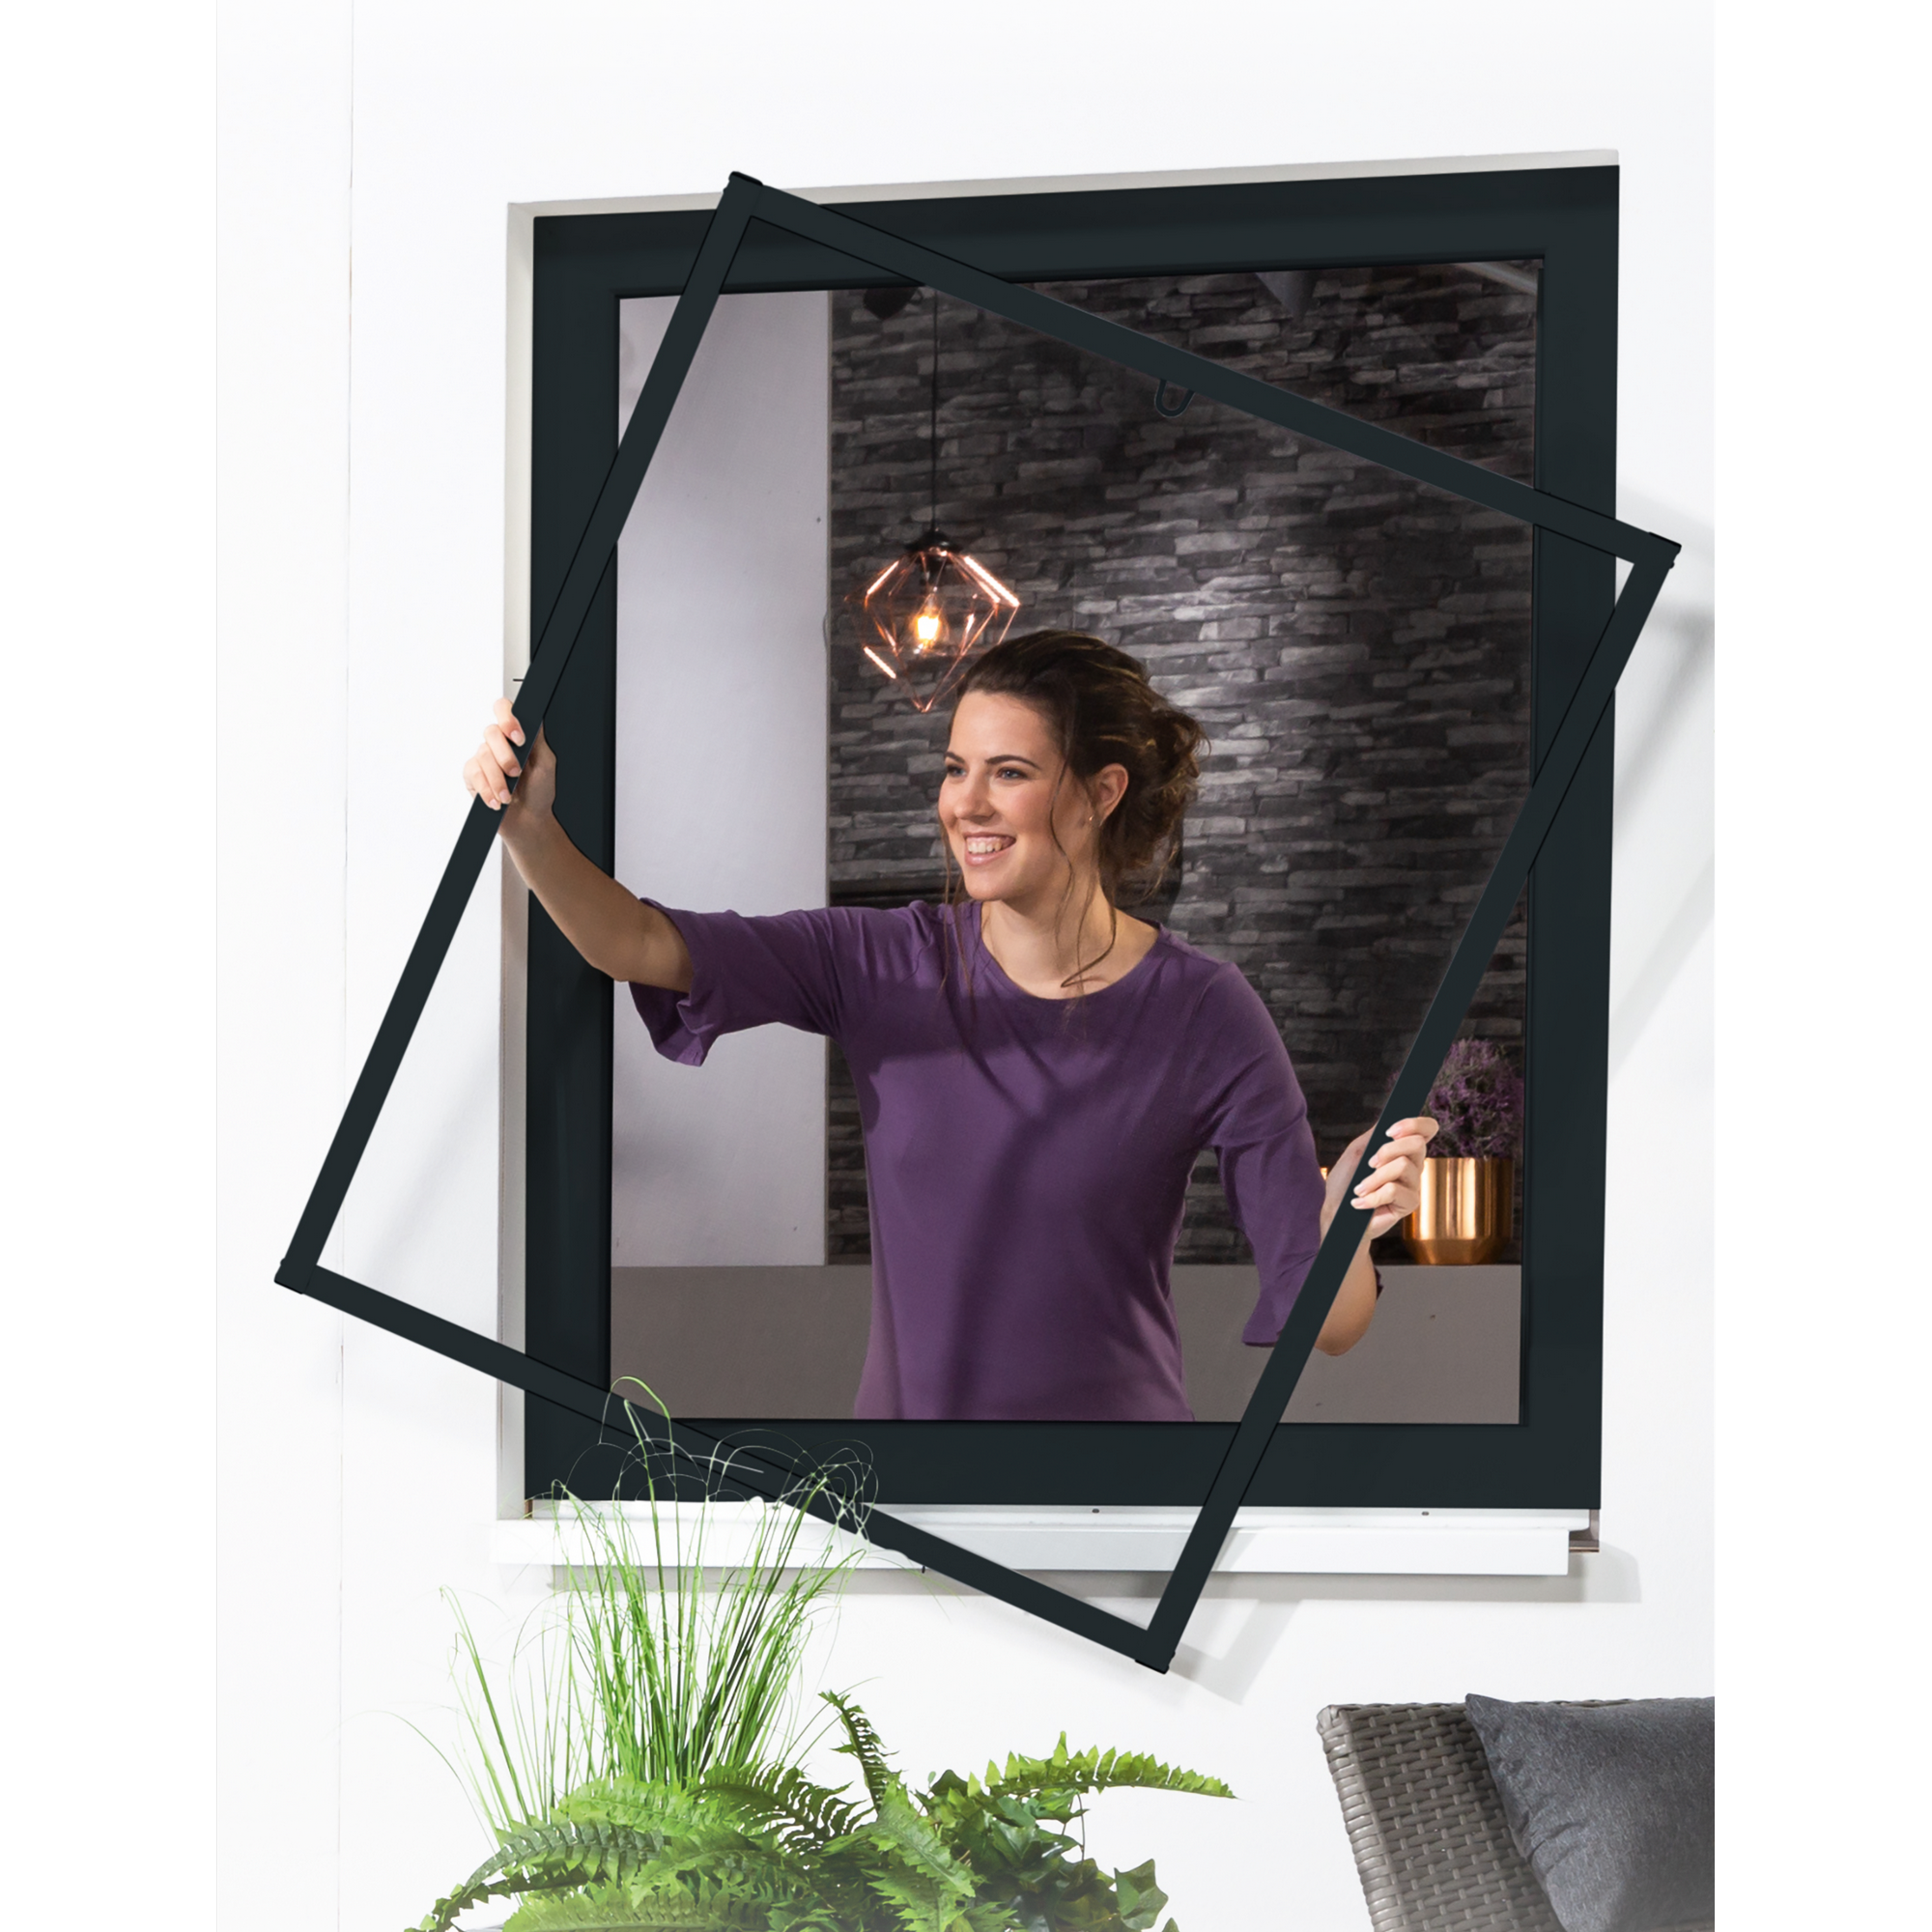 Alu-Bausatz für Fenster 'Master Slim' 100 x 120 cm anthrazit + product picture